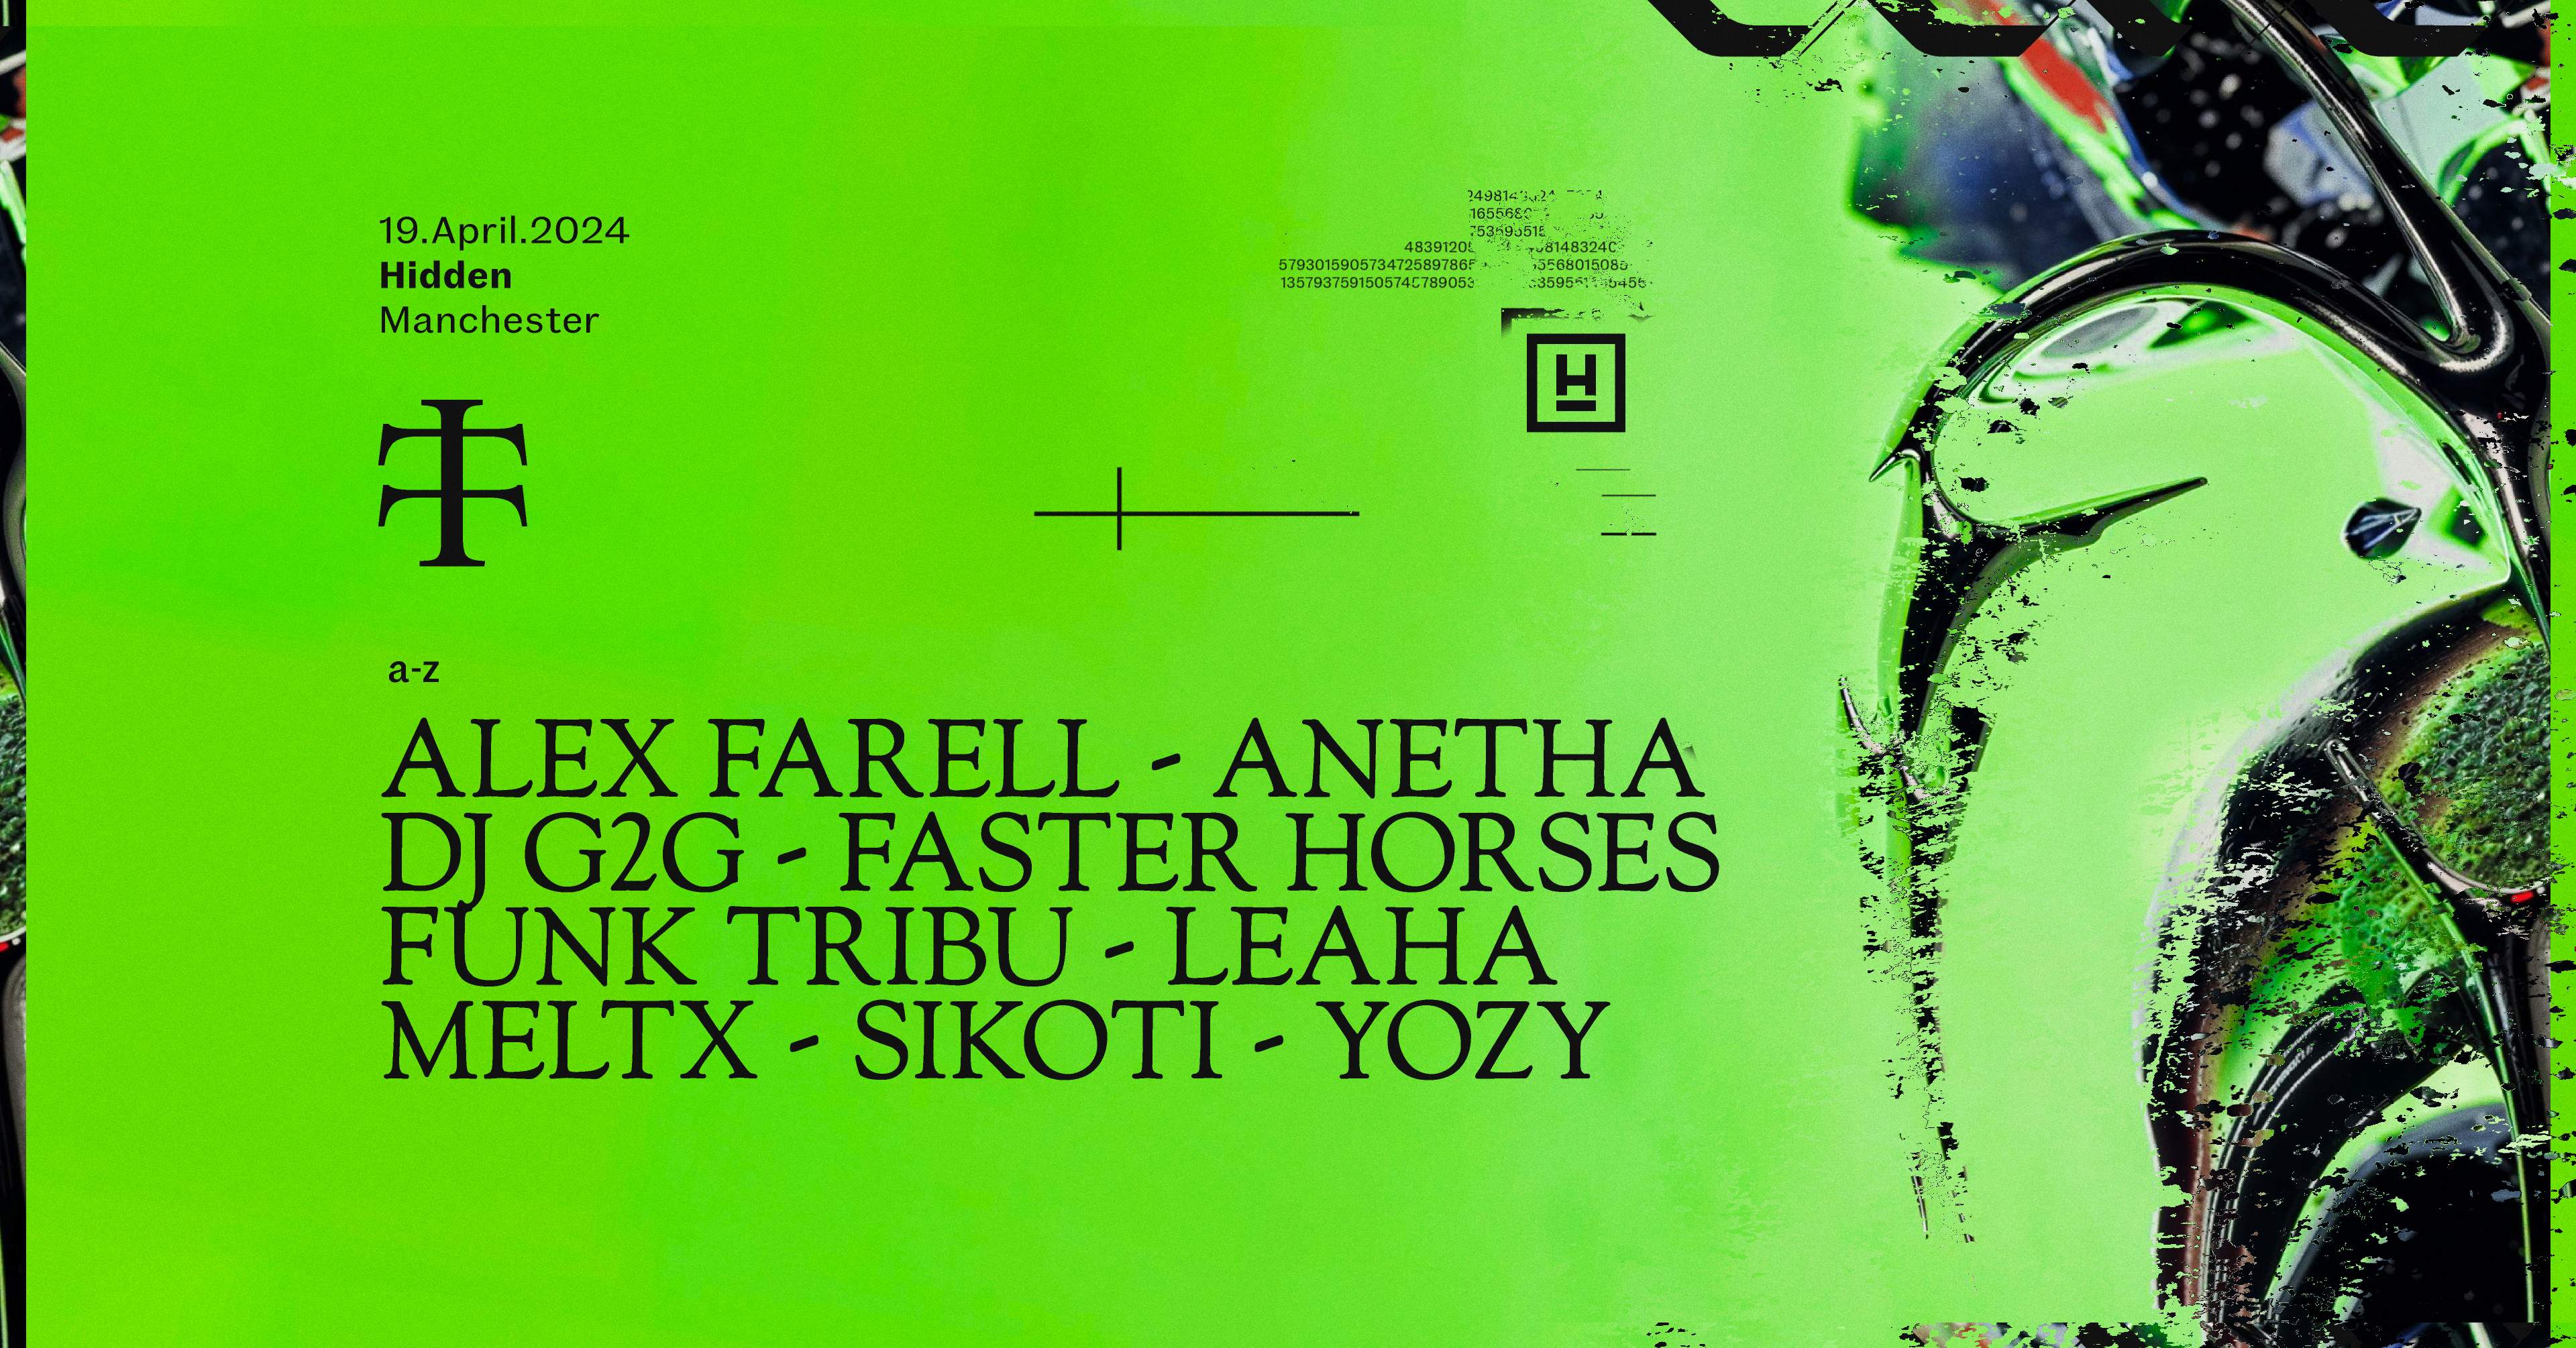 Teletech: Anetha, Funk Tribu, Faster Horses, SIKOTI, DJ G2G - フライヤー表